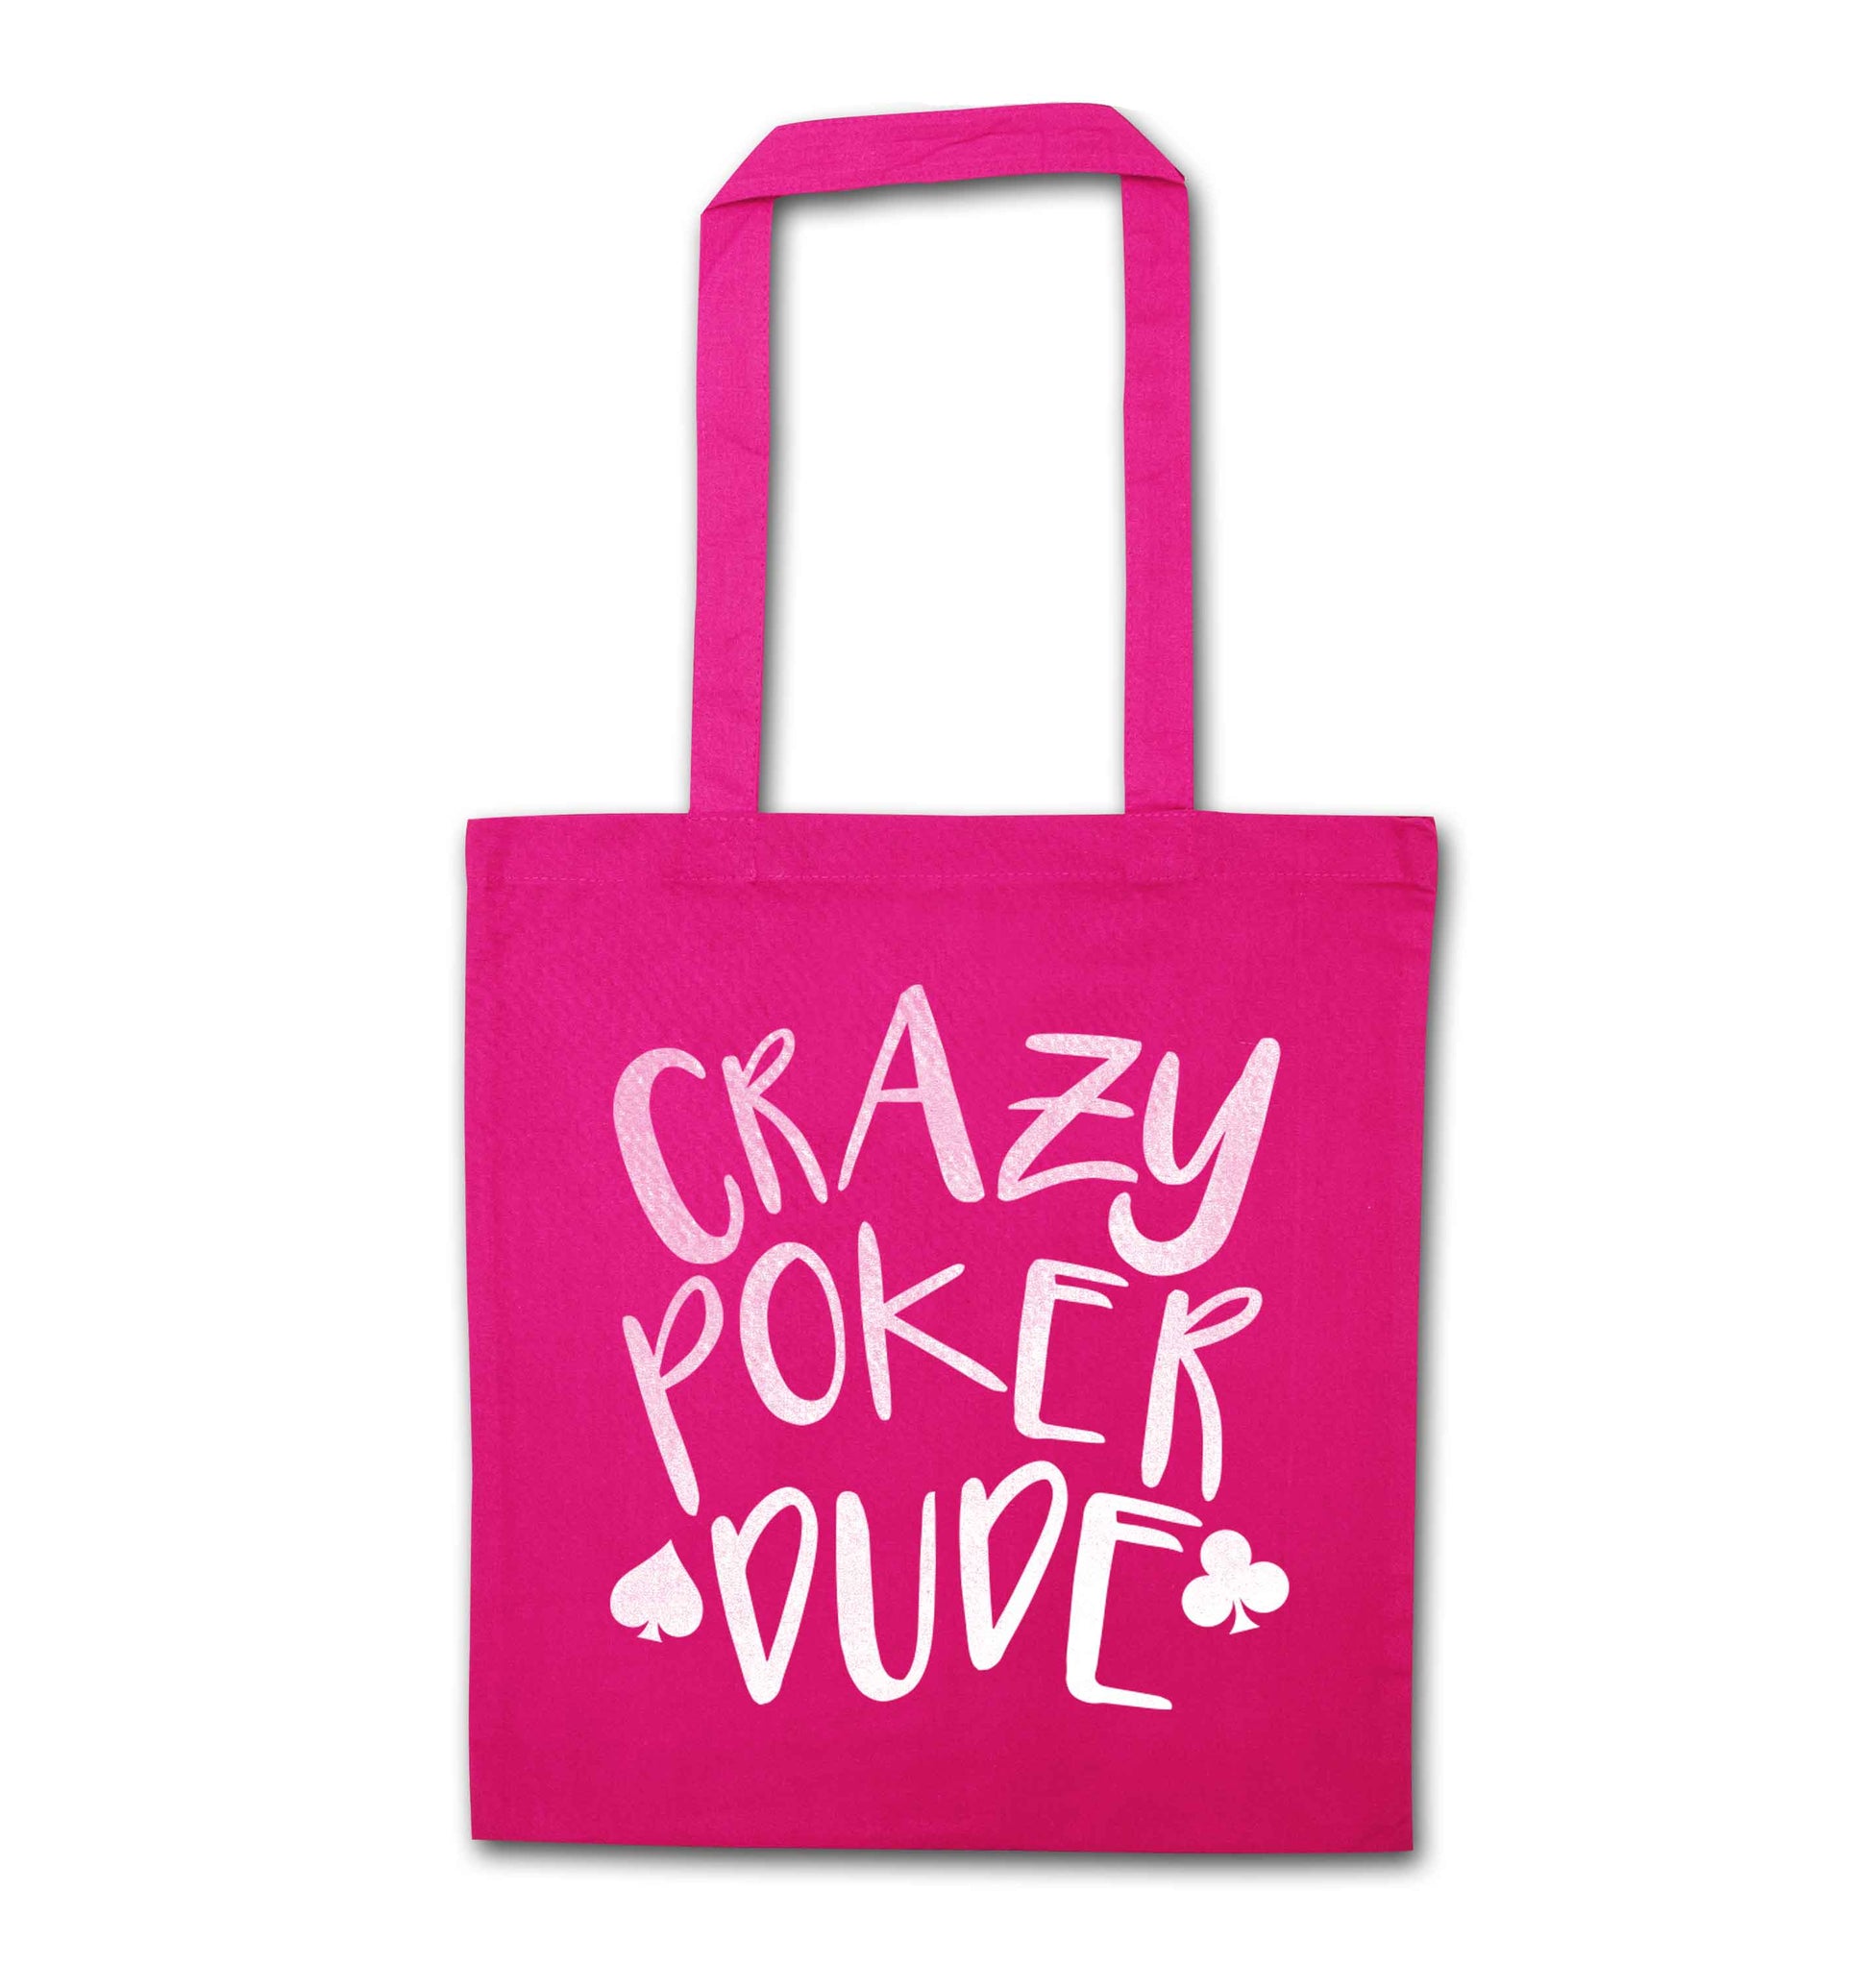 Crazy poker dude pink tote bag